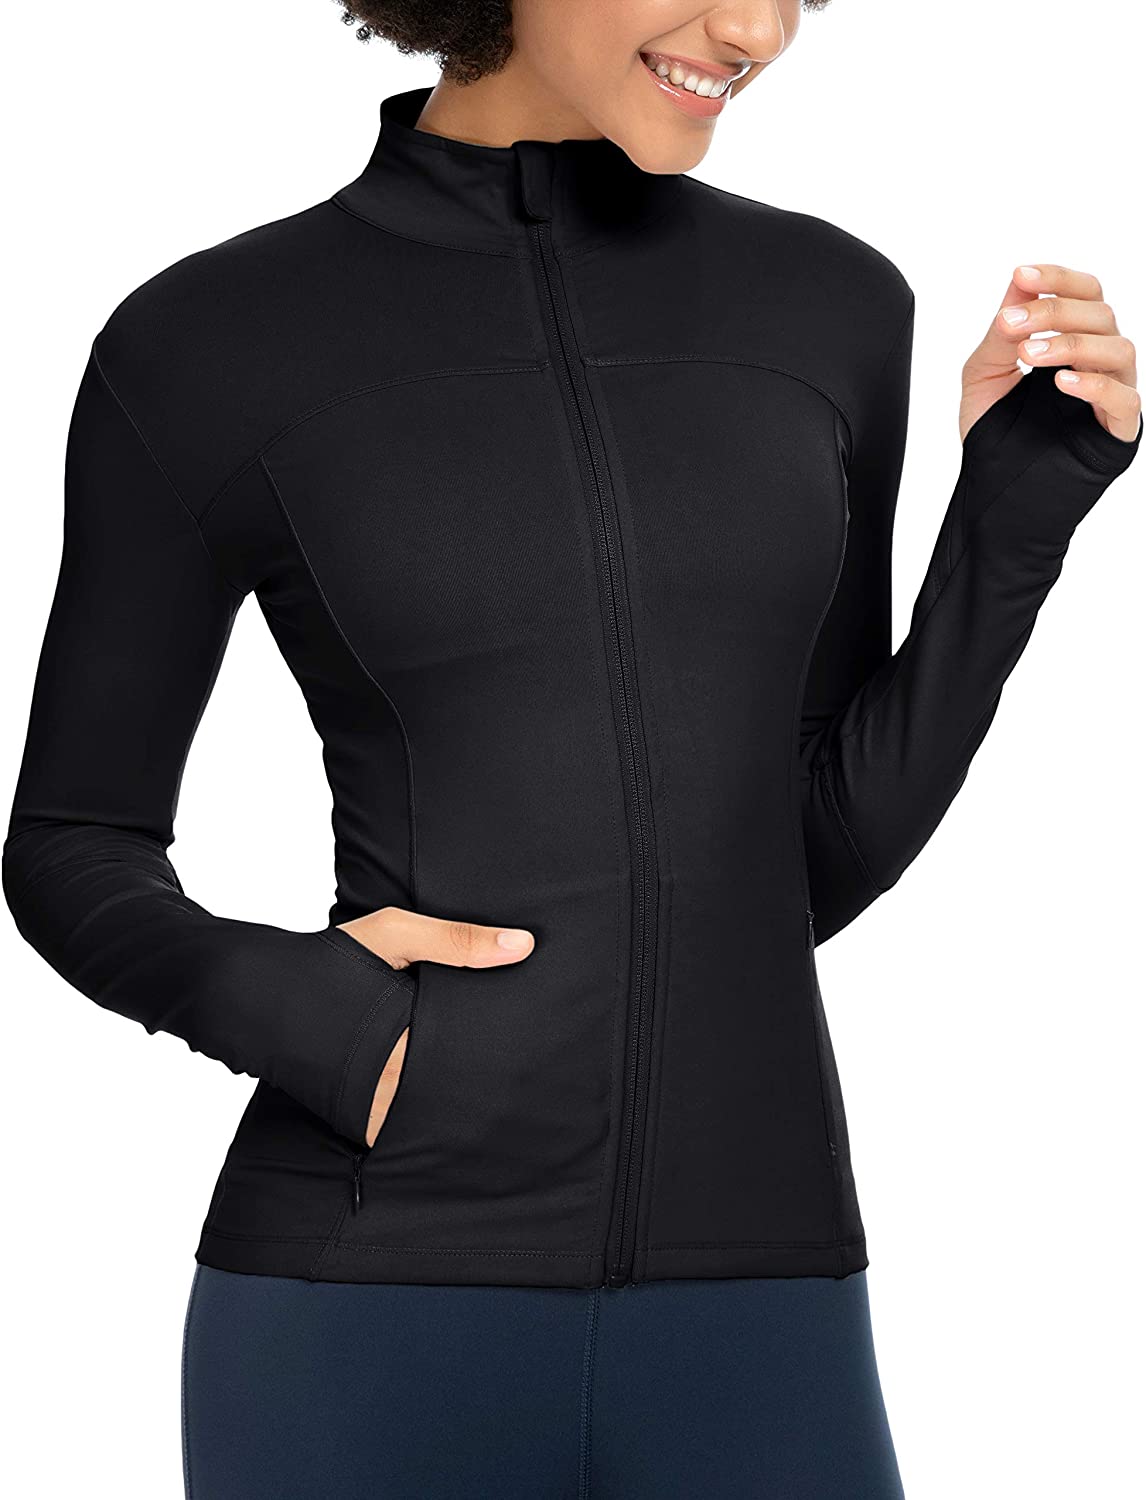 Yelete Women's Activewear Zip Up Workout Jacket w Hoodie, Charcoal